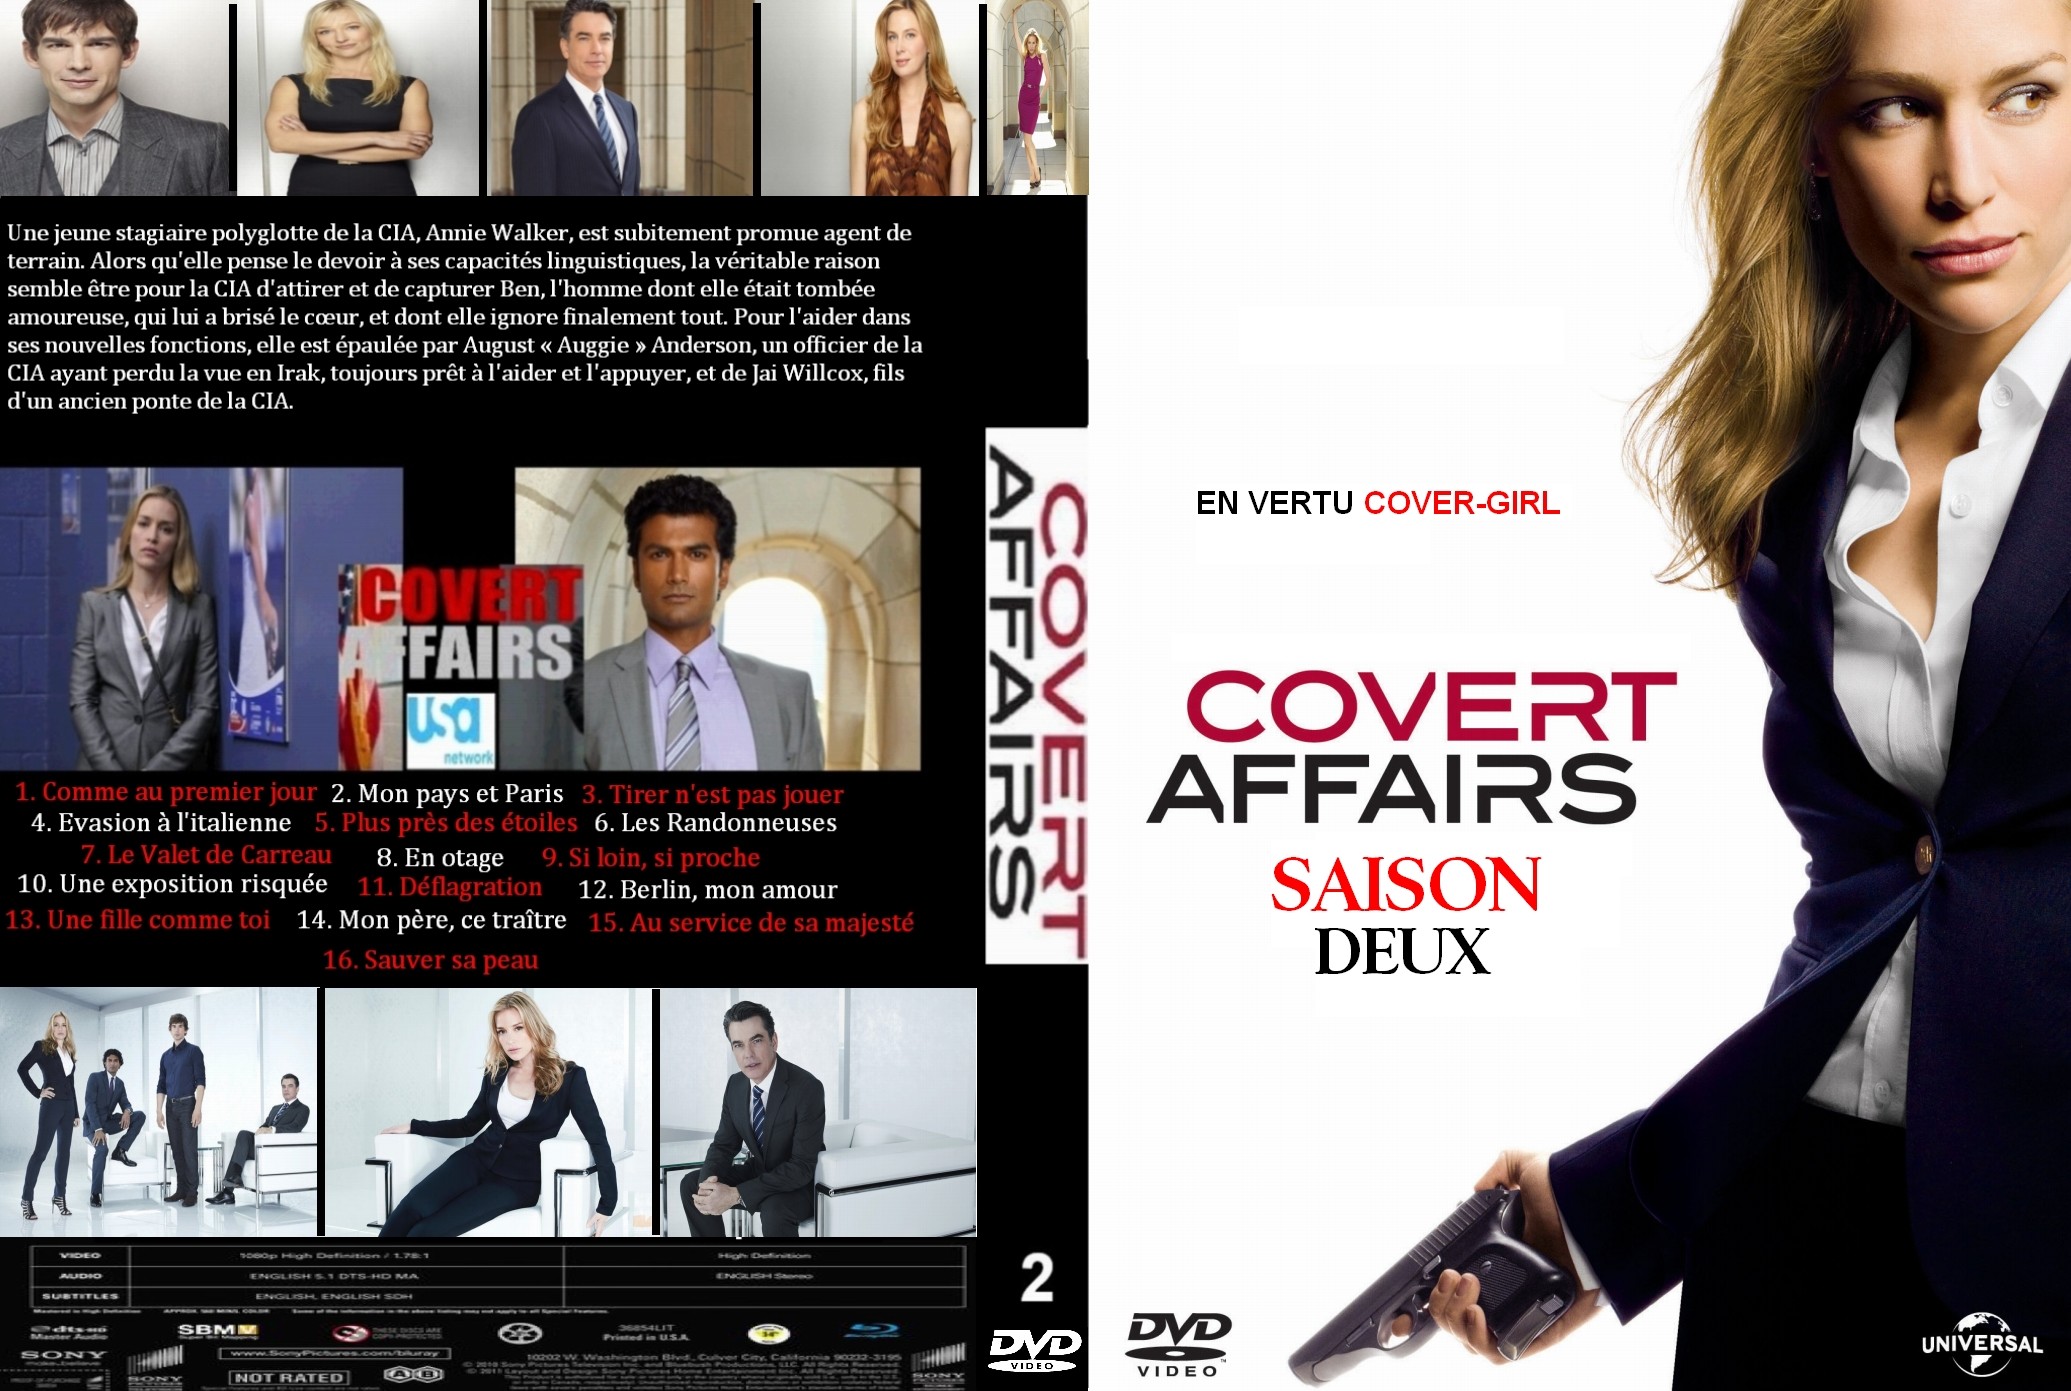 Jaquette DVD Covert Affairs Saison 2 custom